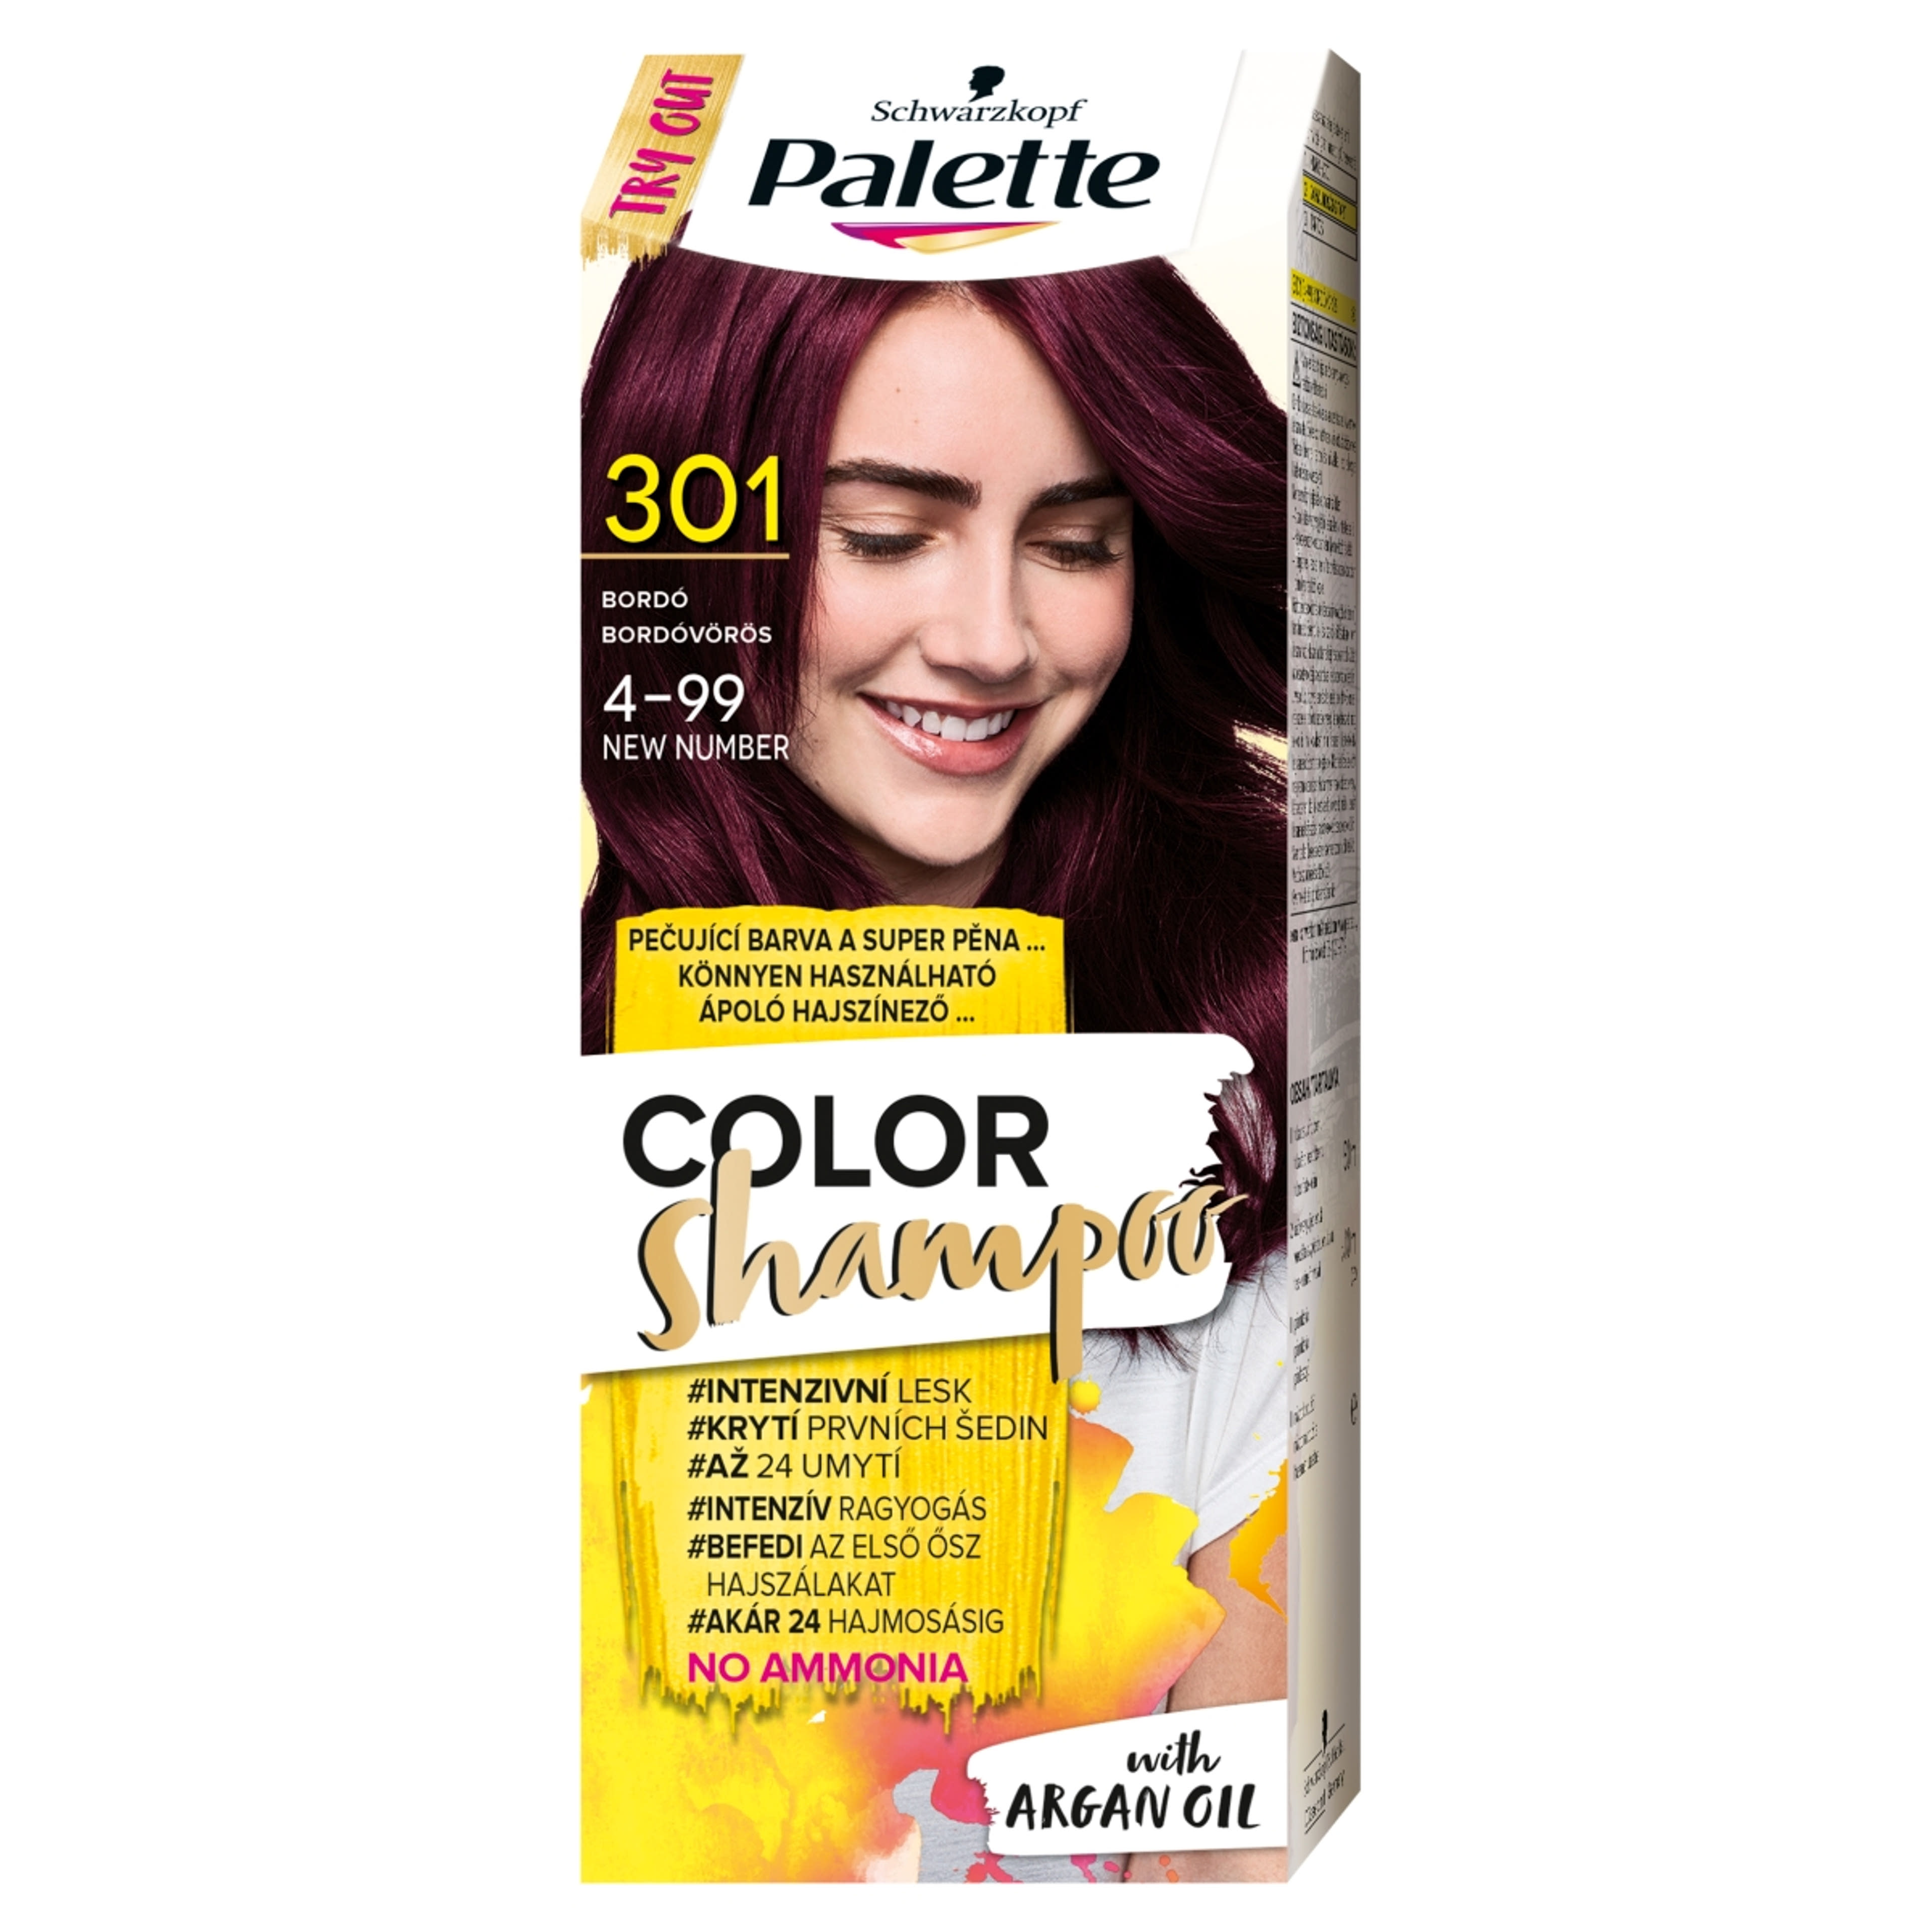 Schwarzkopf Palette Color Shampoo hajfesték 301 bordóvörös - 1 db